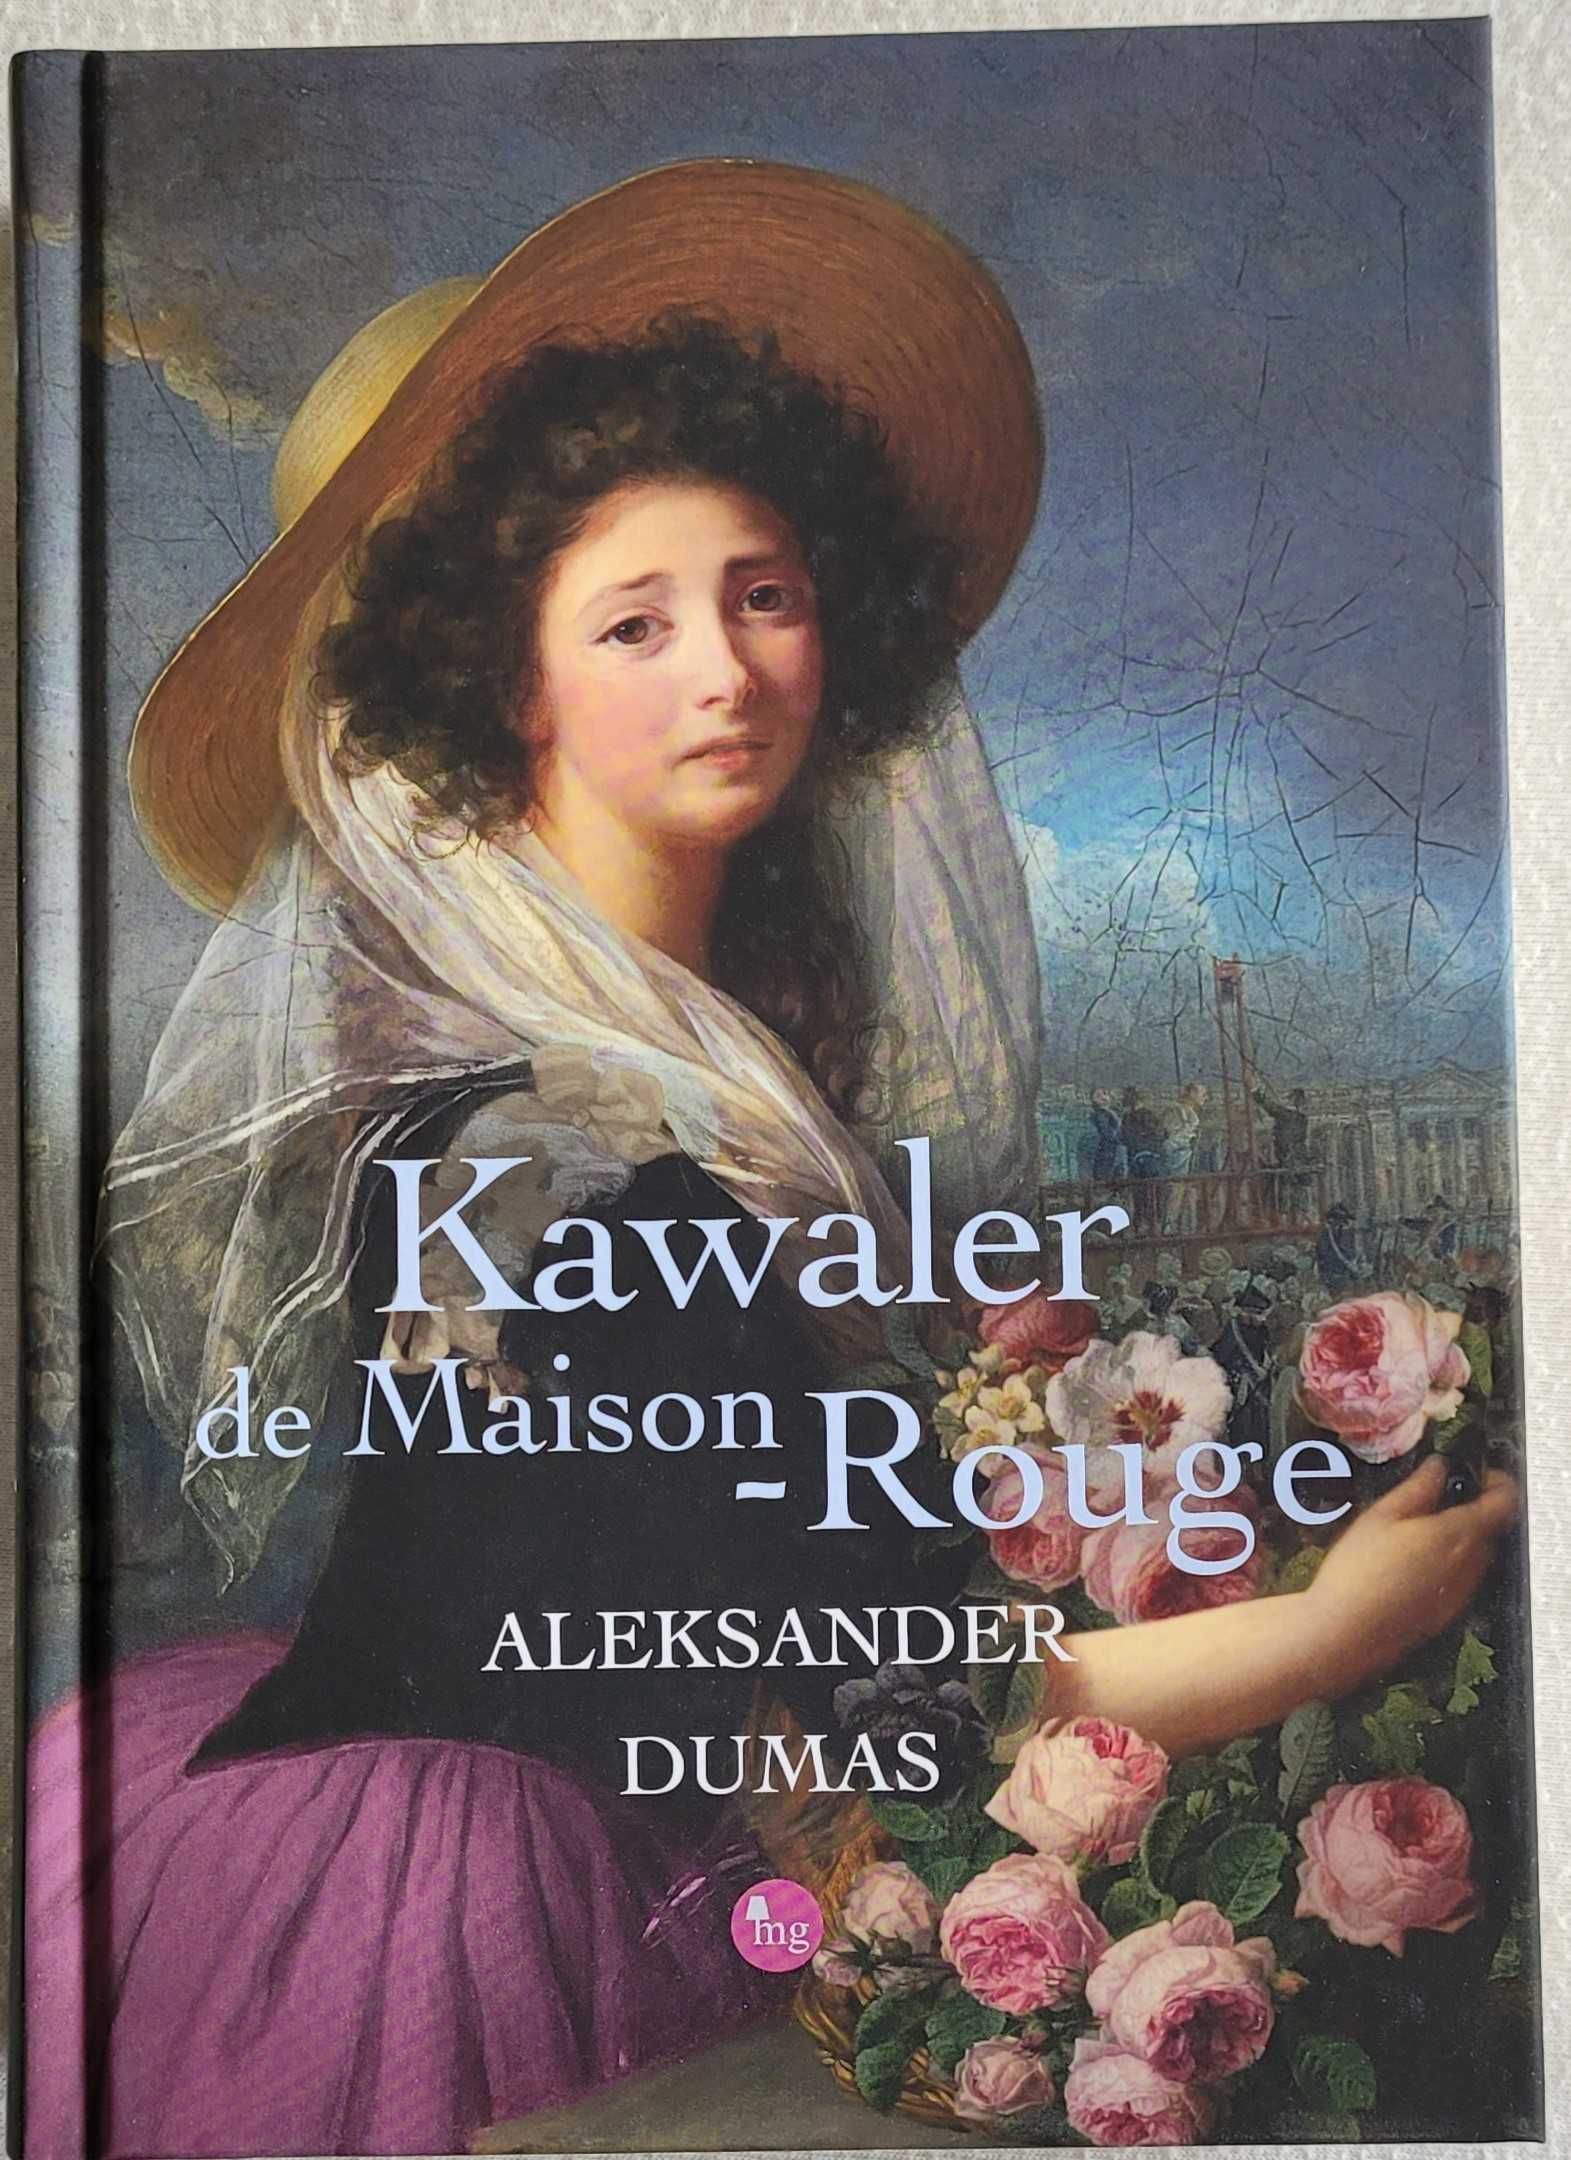 Książka pt. "Kawaler de Maison-Rouge"